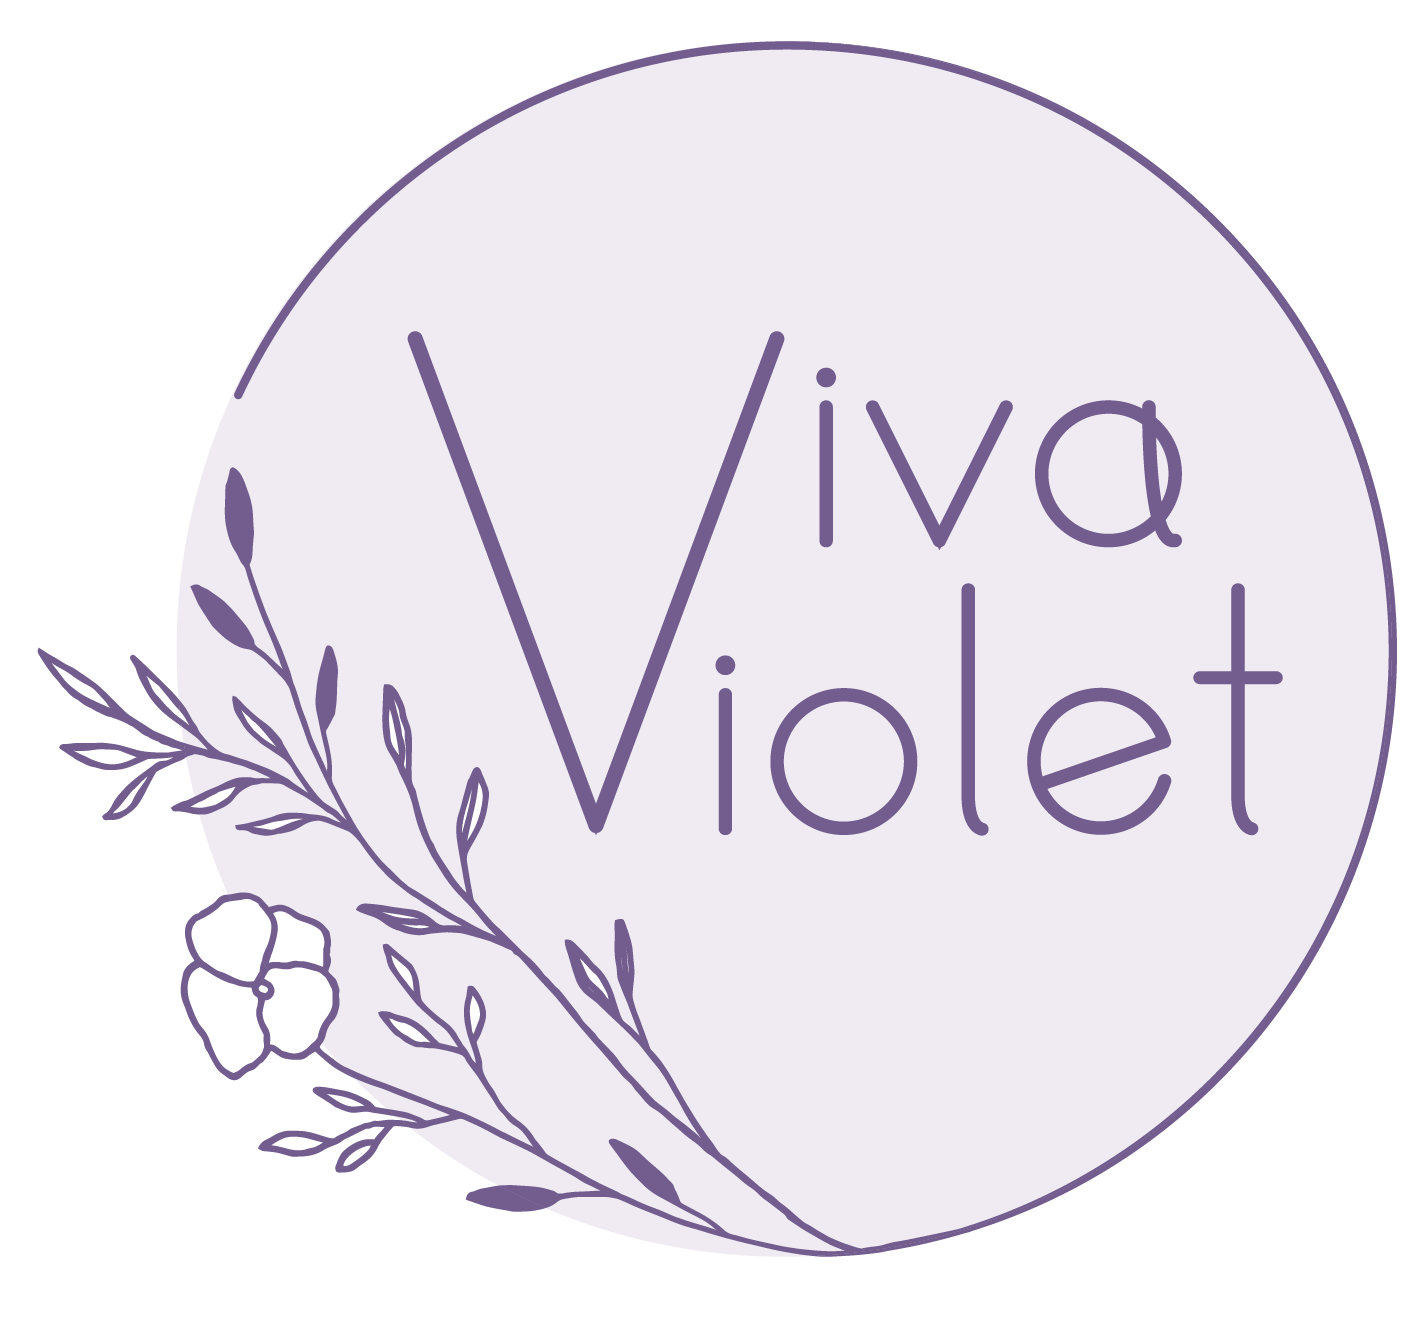 Viva Violet